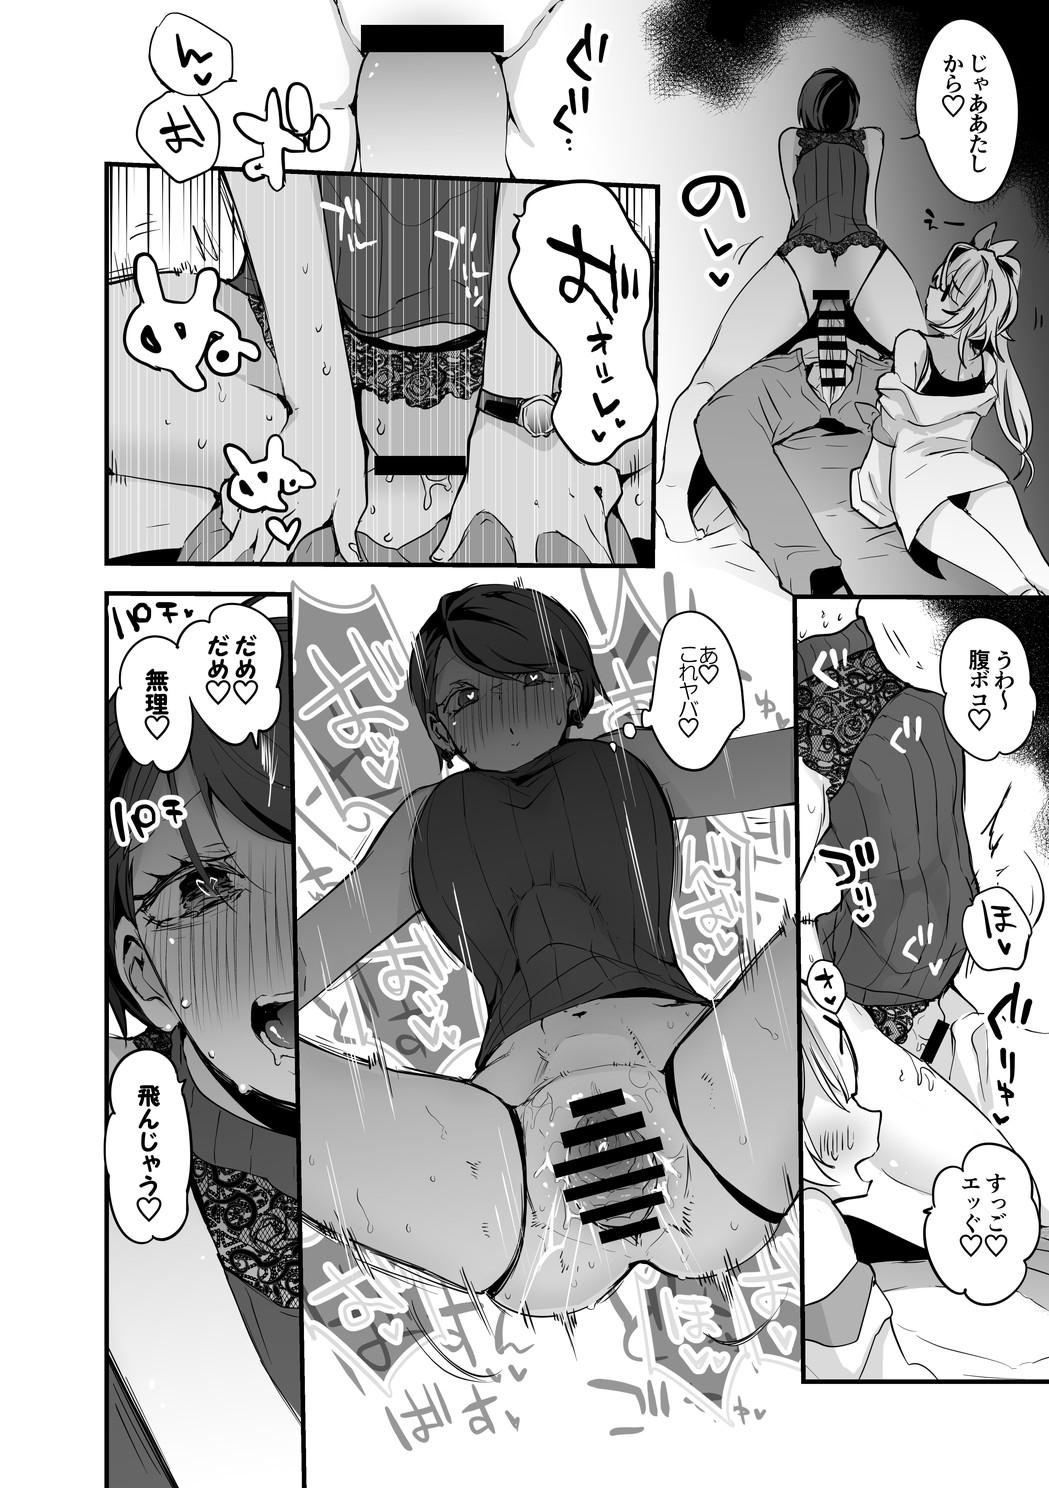 Fudendo それ行け炎上流星群編 - Nijisanji Sucks - Page 5